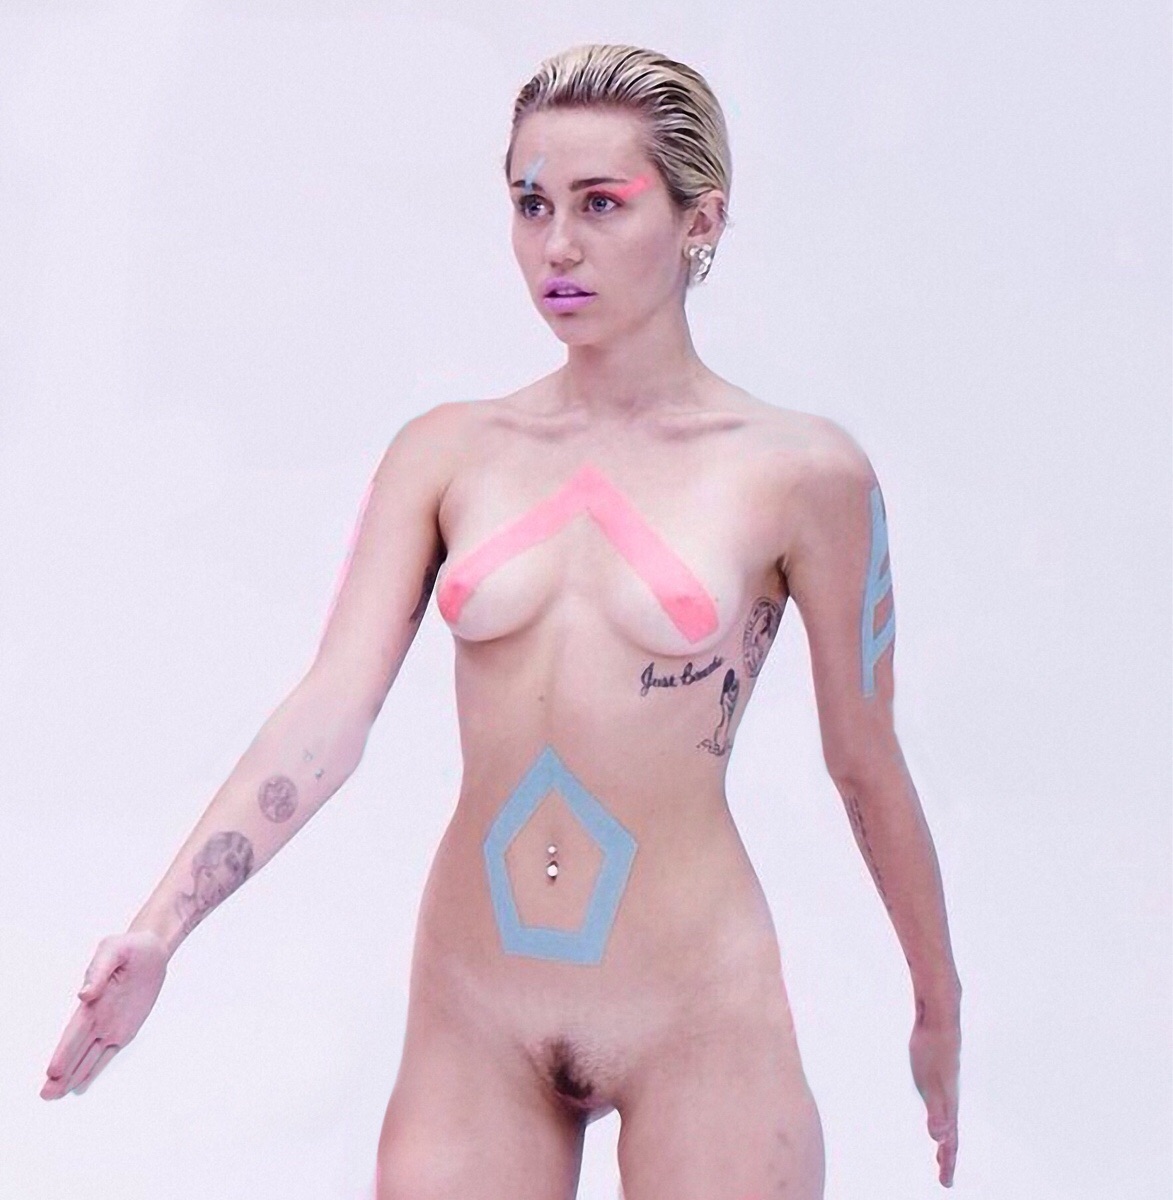 ashton adkins share miley cyrus facetime nudes photos